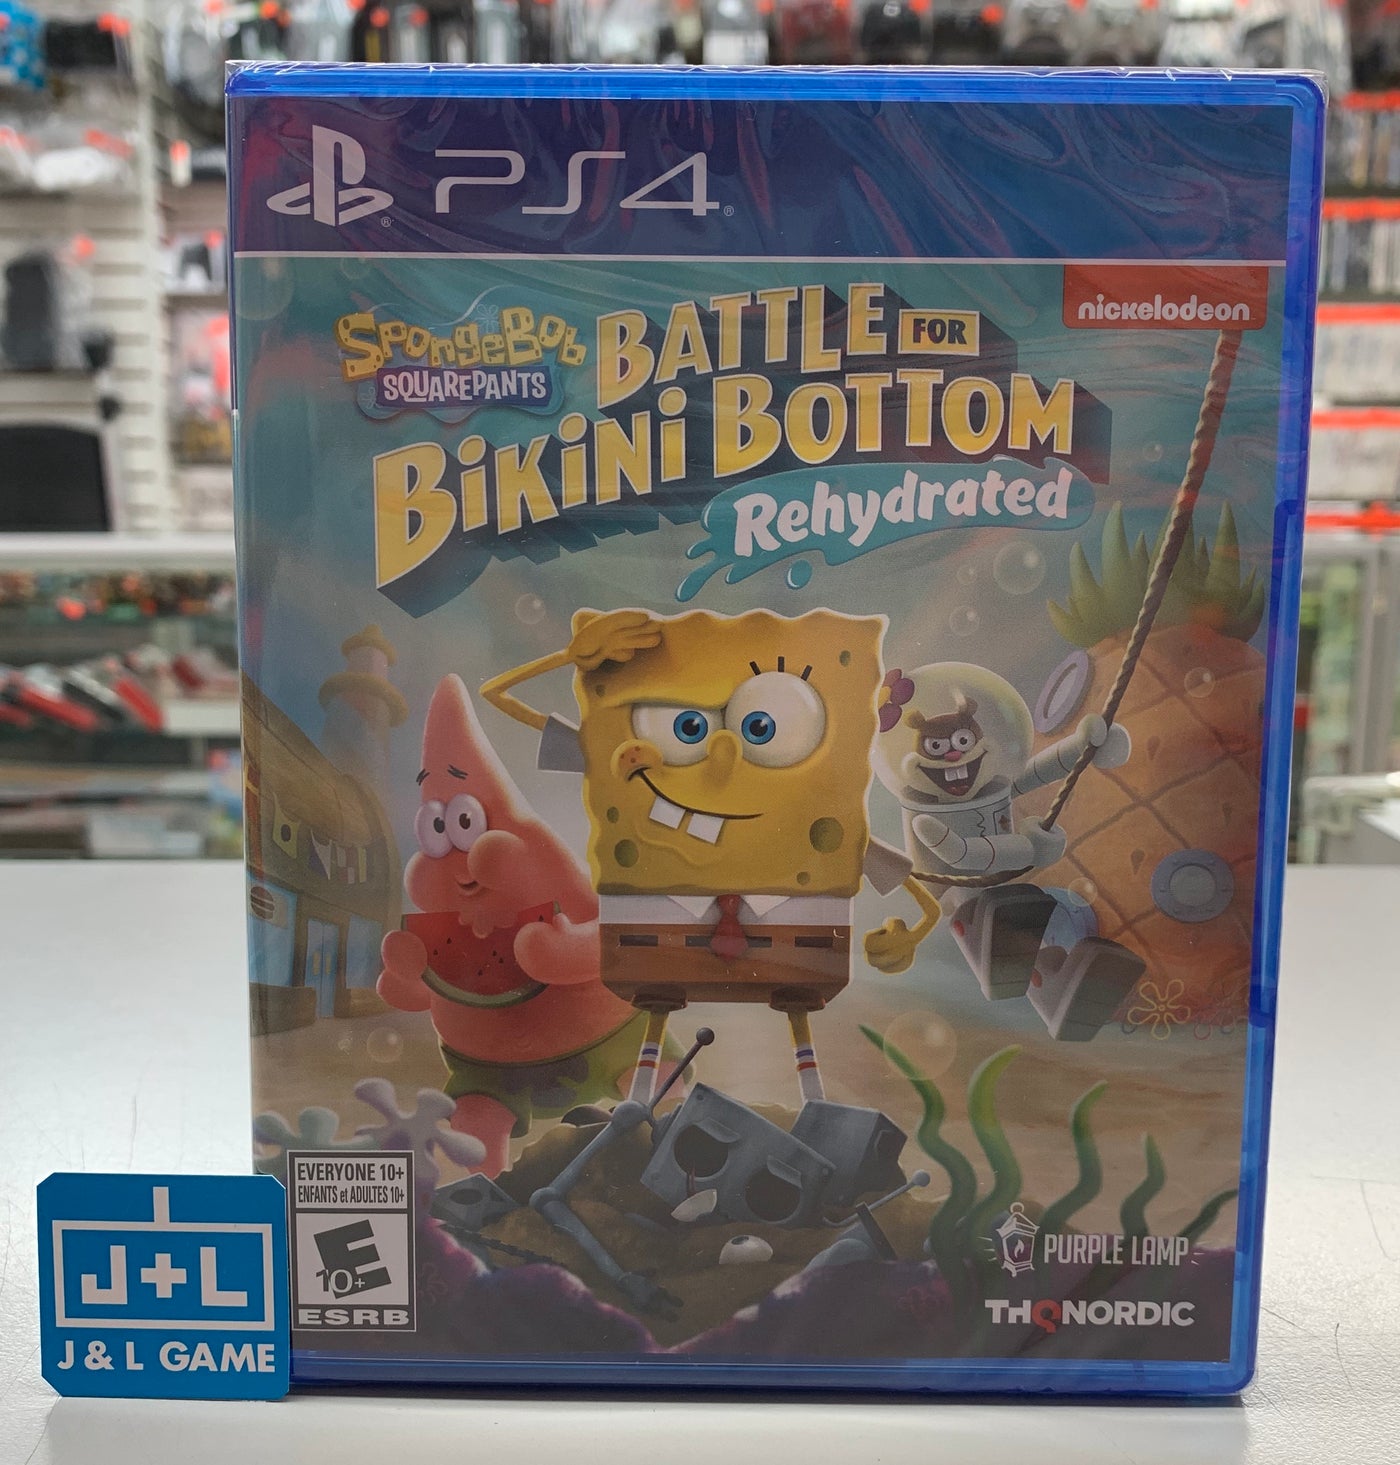 Spongebob Squarepants: Game - J&L - Bikini Rehydrated Bottom for PlaySta Battle 